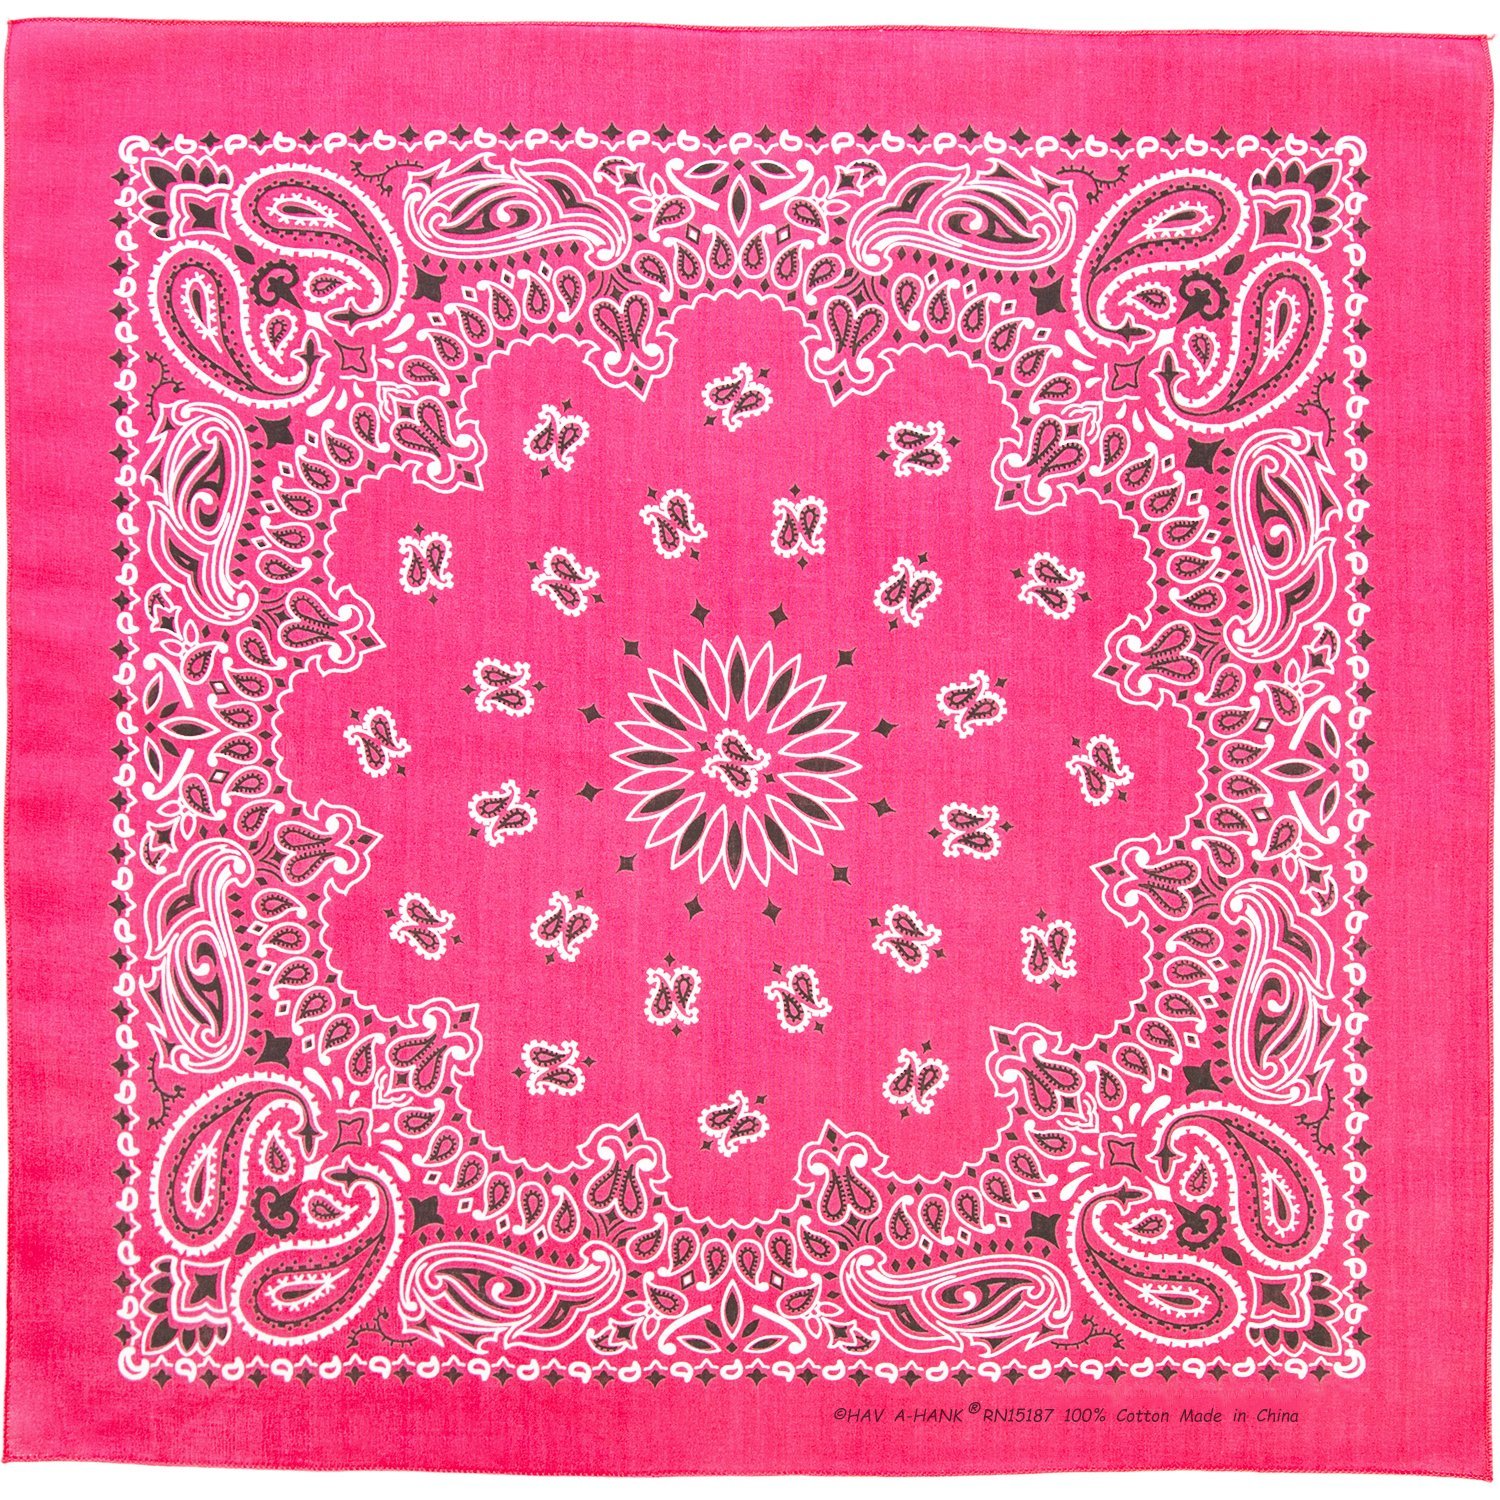 Neon Hot Pink Western Paisley Bandana - Imported Single Piece 22x22